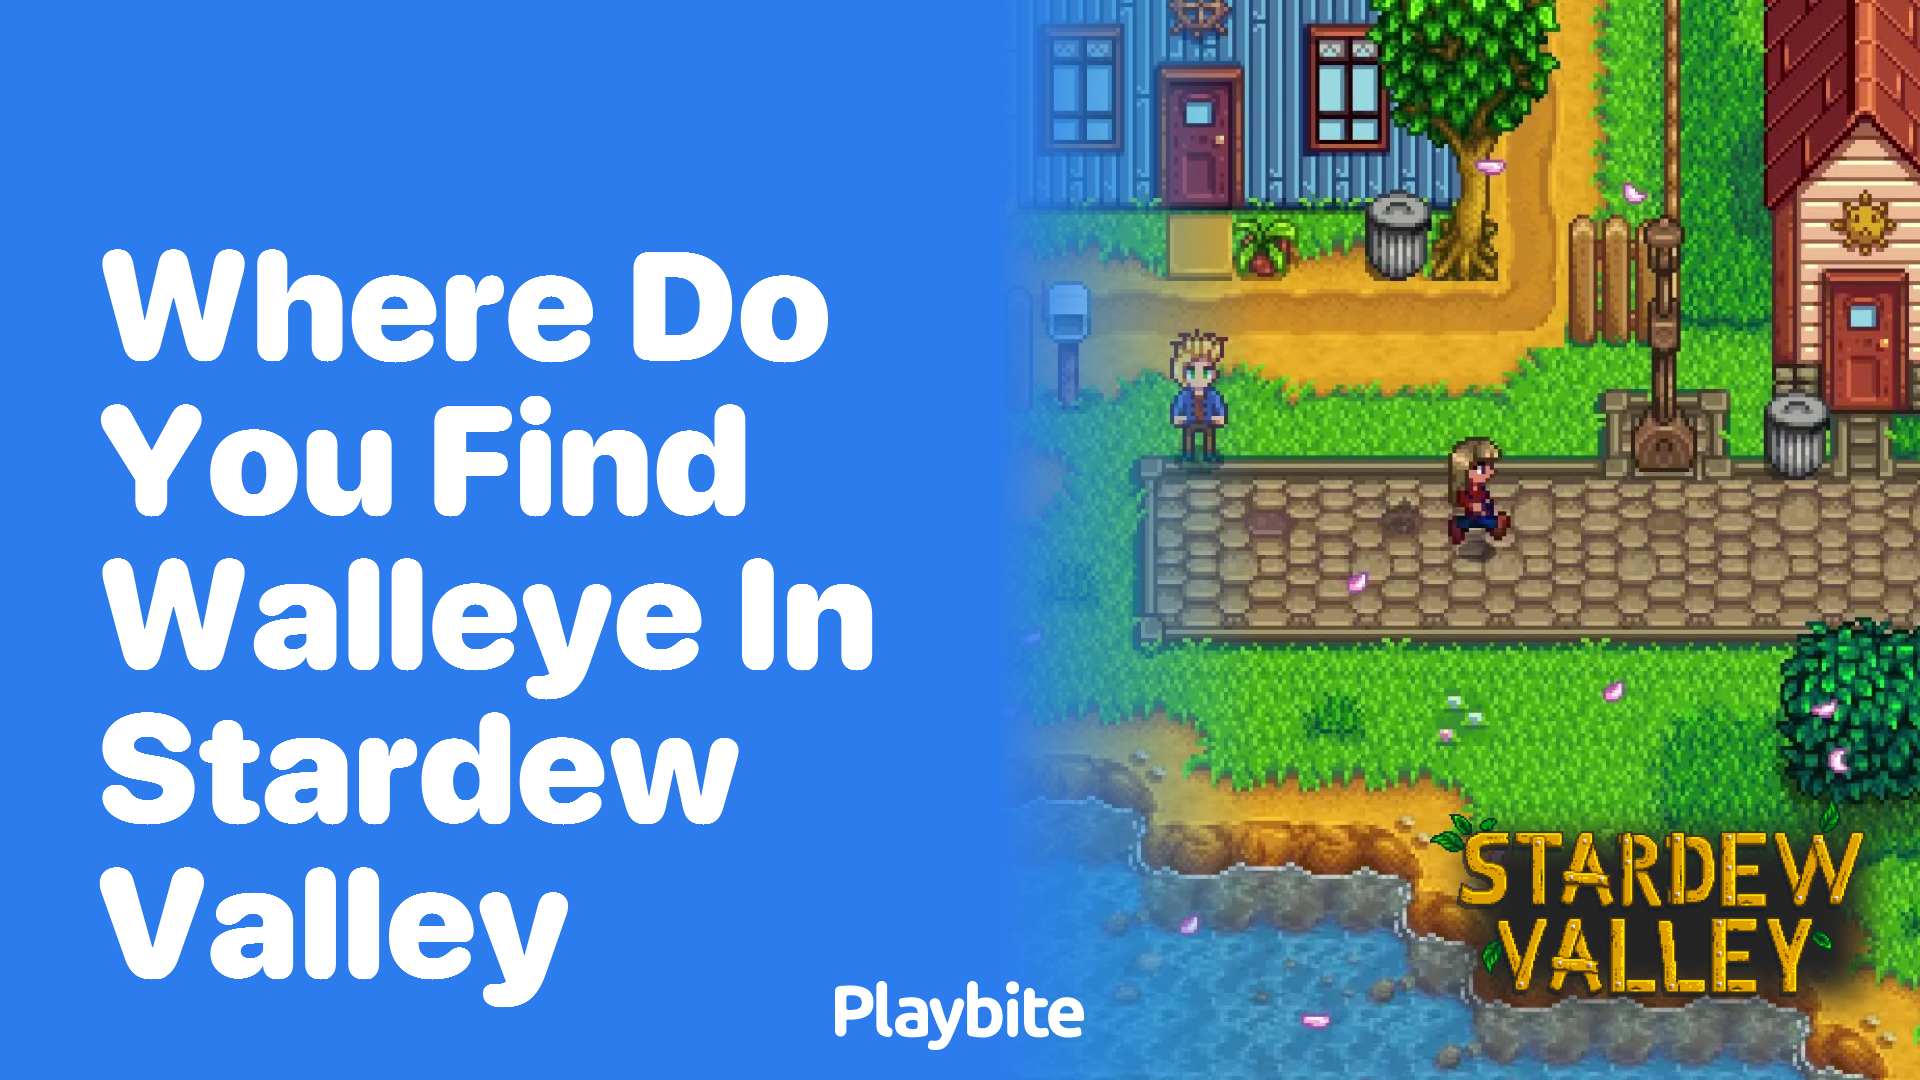 Where do you find Walleye in Stardew Valley?